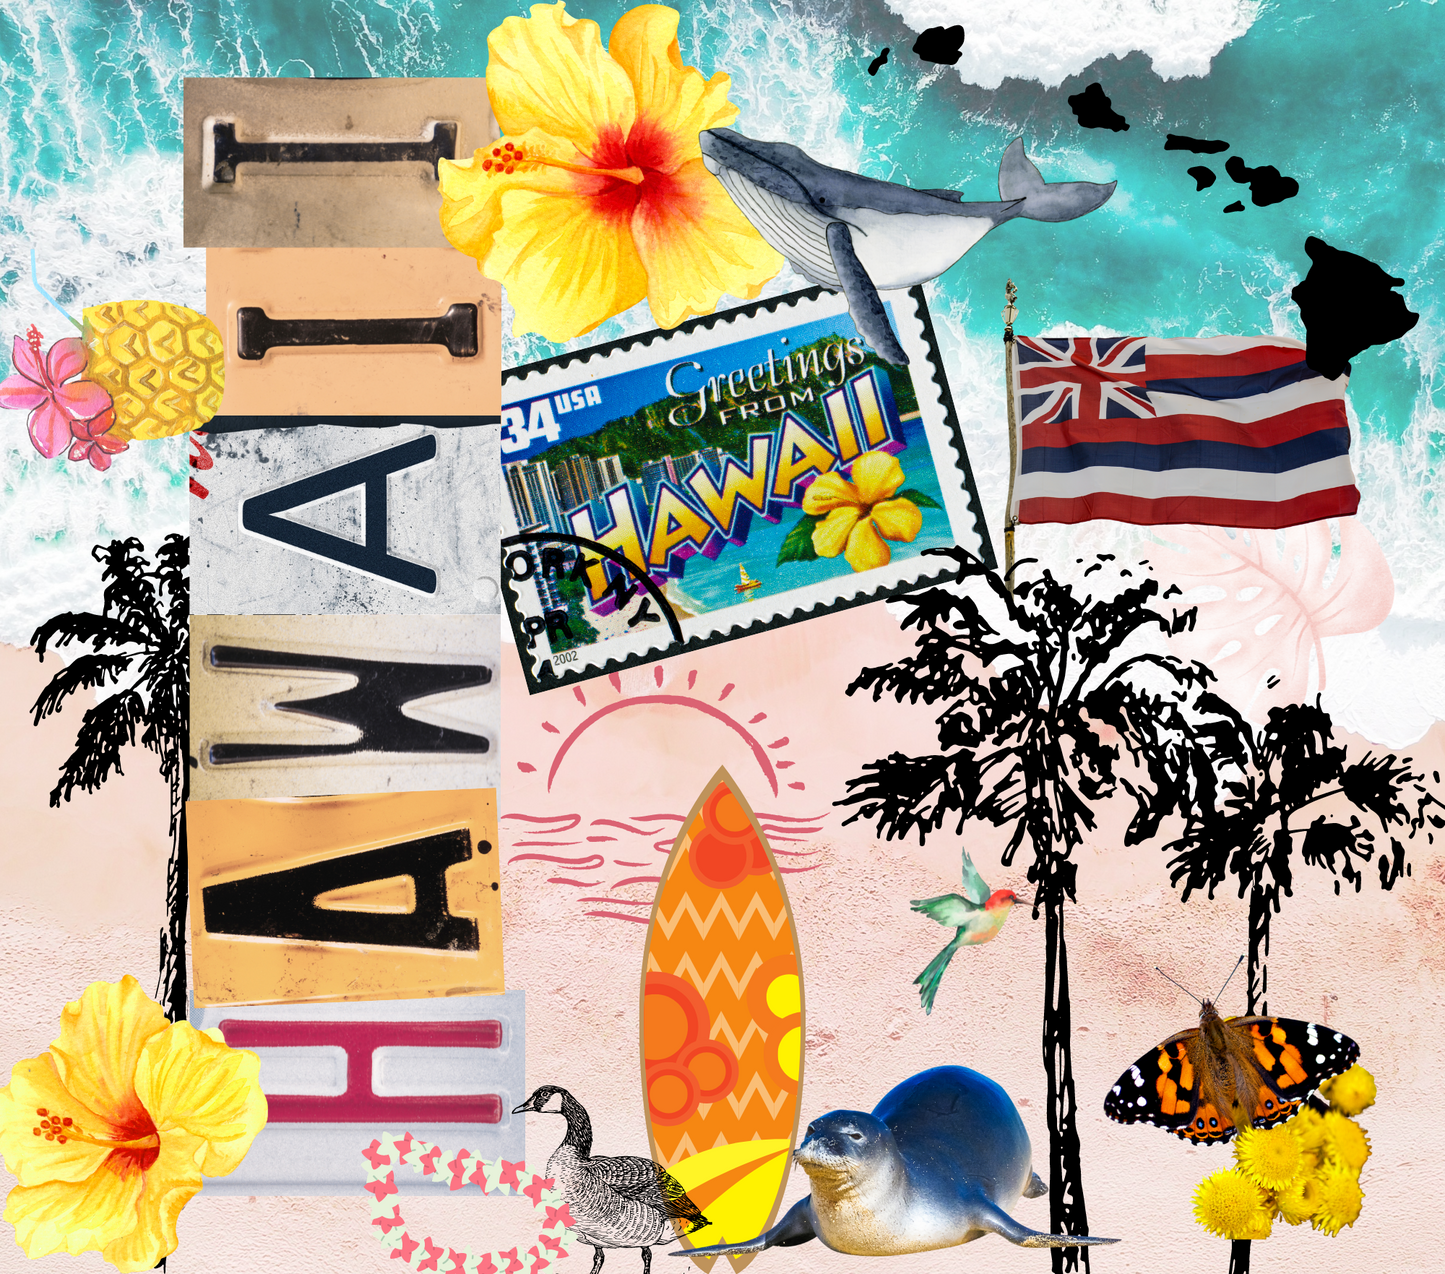 State: Hawaii